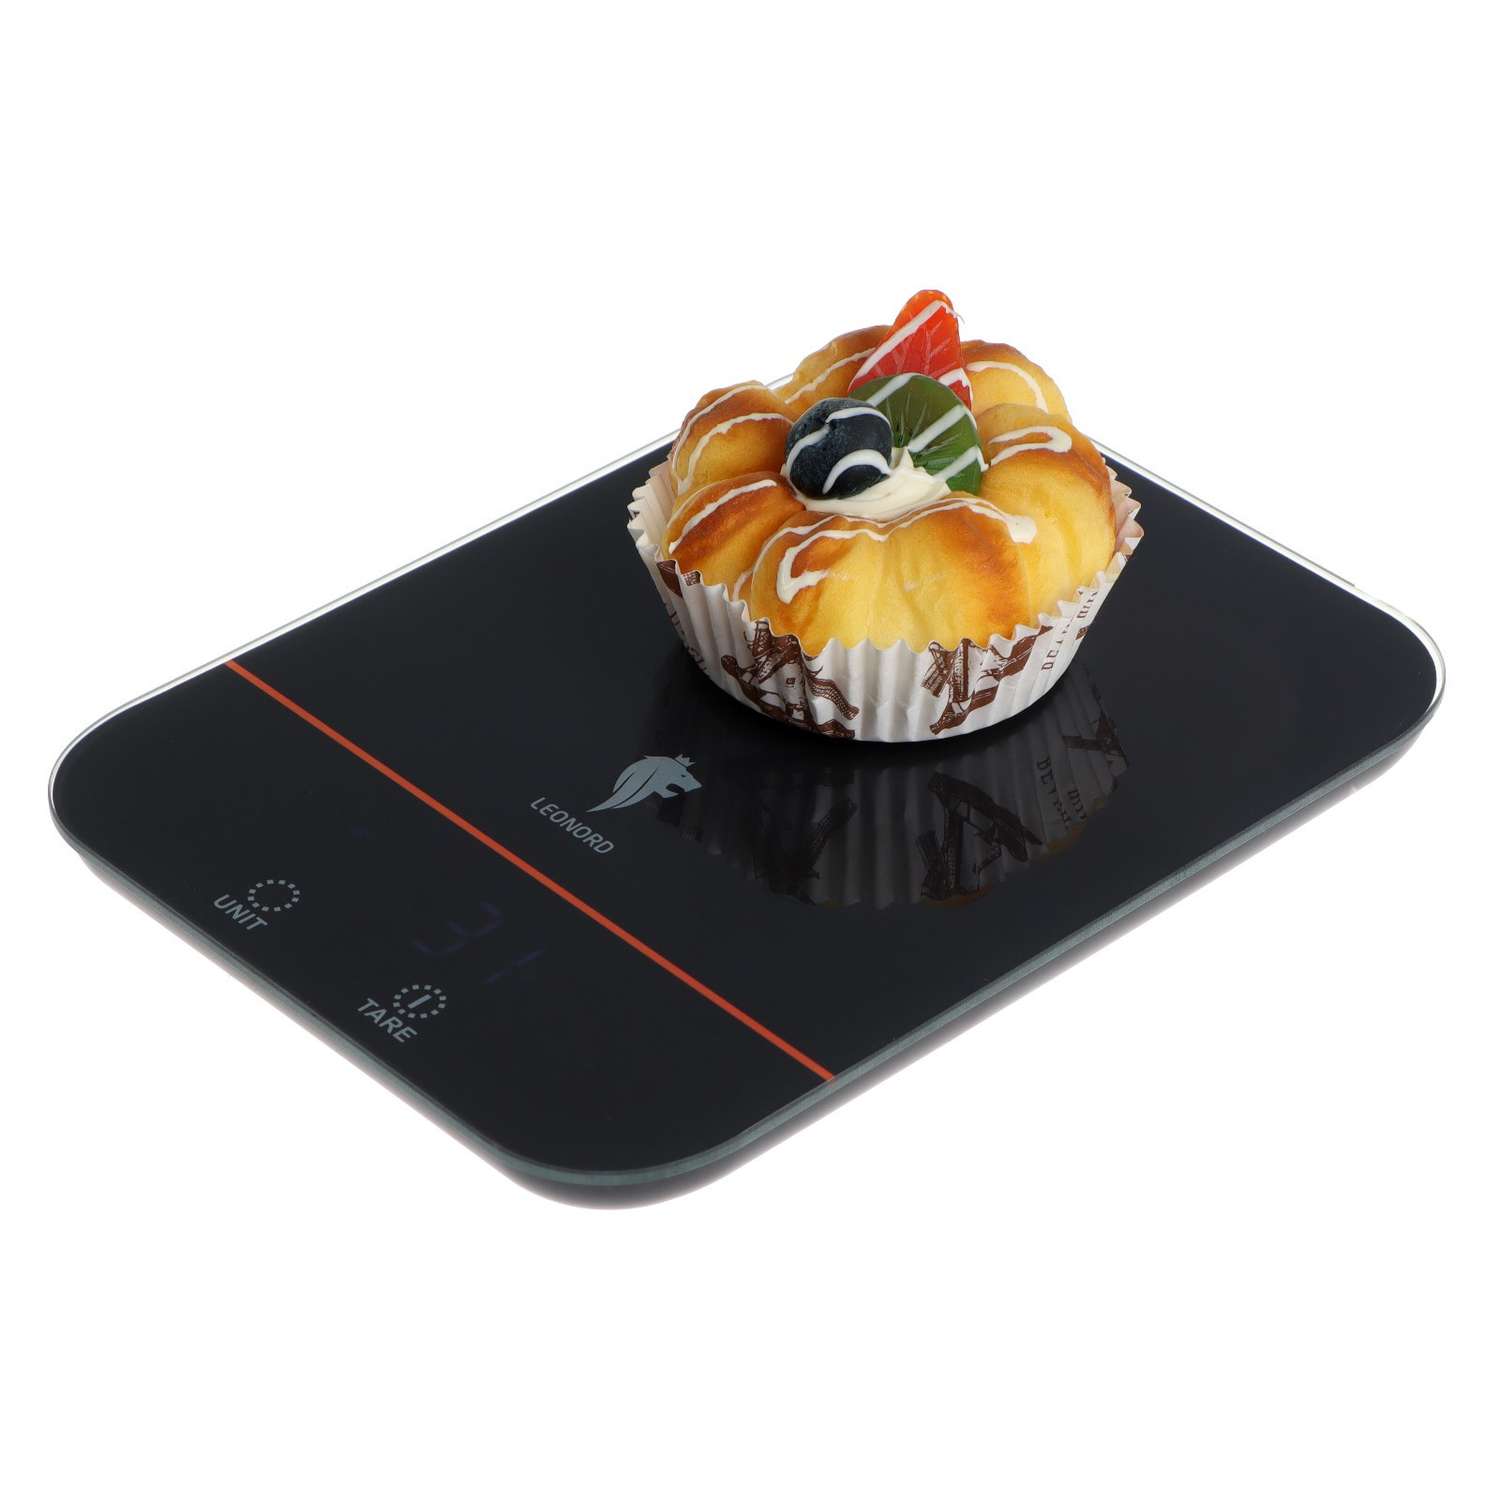 Весы кухонные Luazon Home LE-1706 электронные до 10 кг LCD дисплей чёрные - фото 5